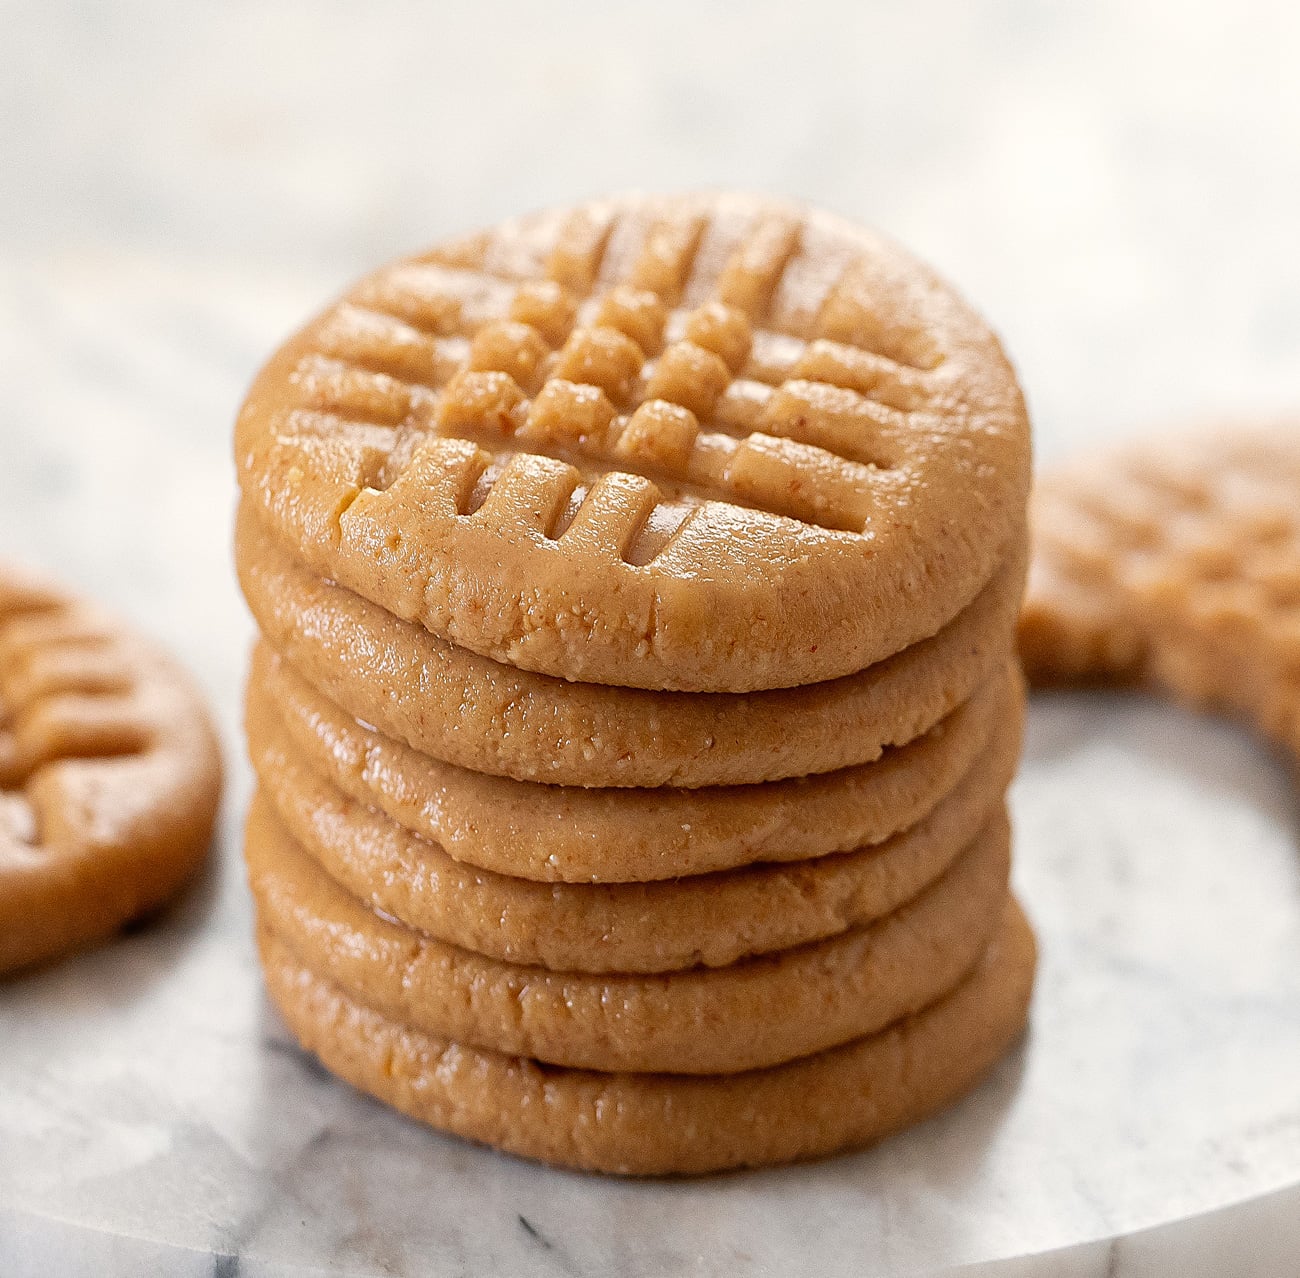 Homemade Peanut Butter Cookies - The Food Charlatan